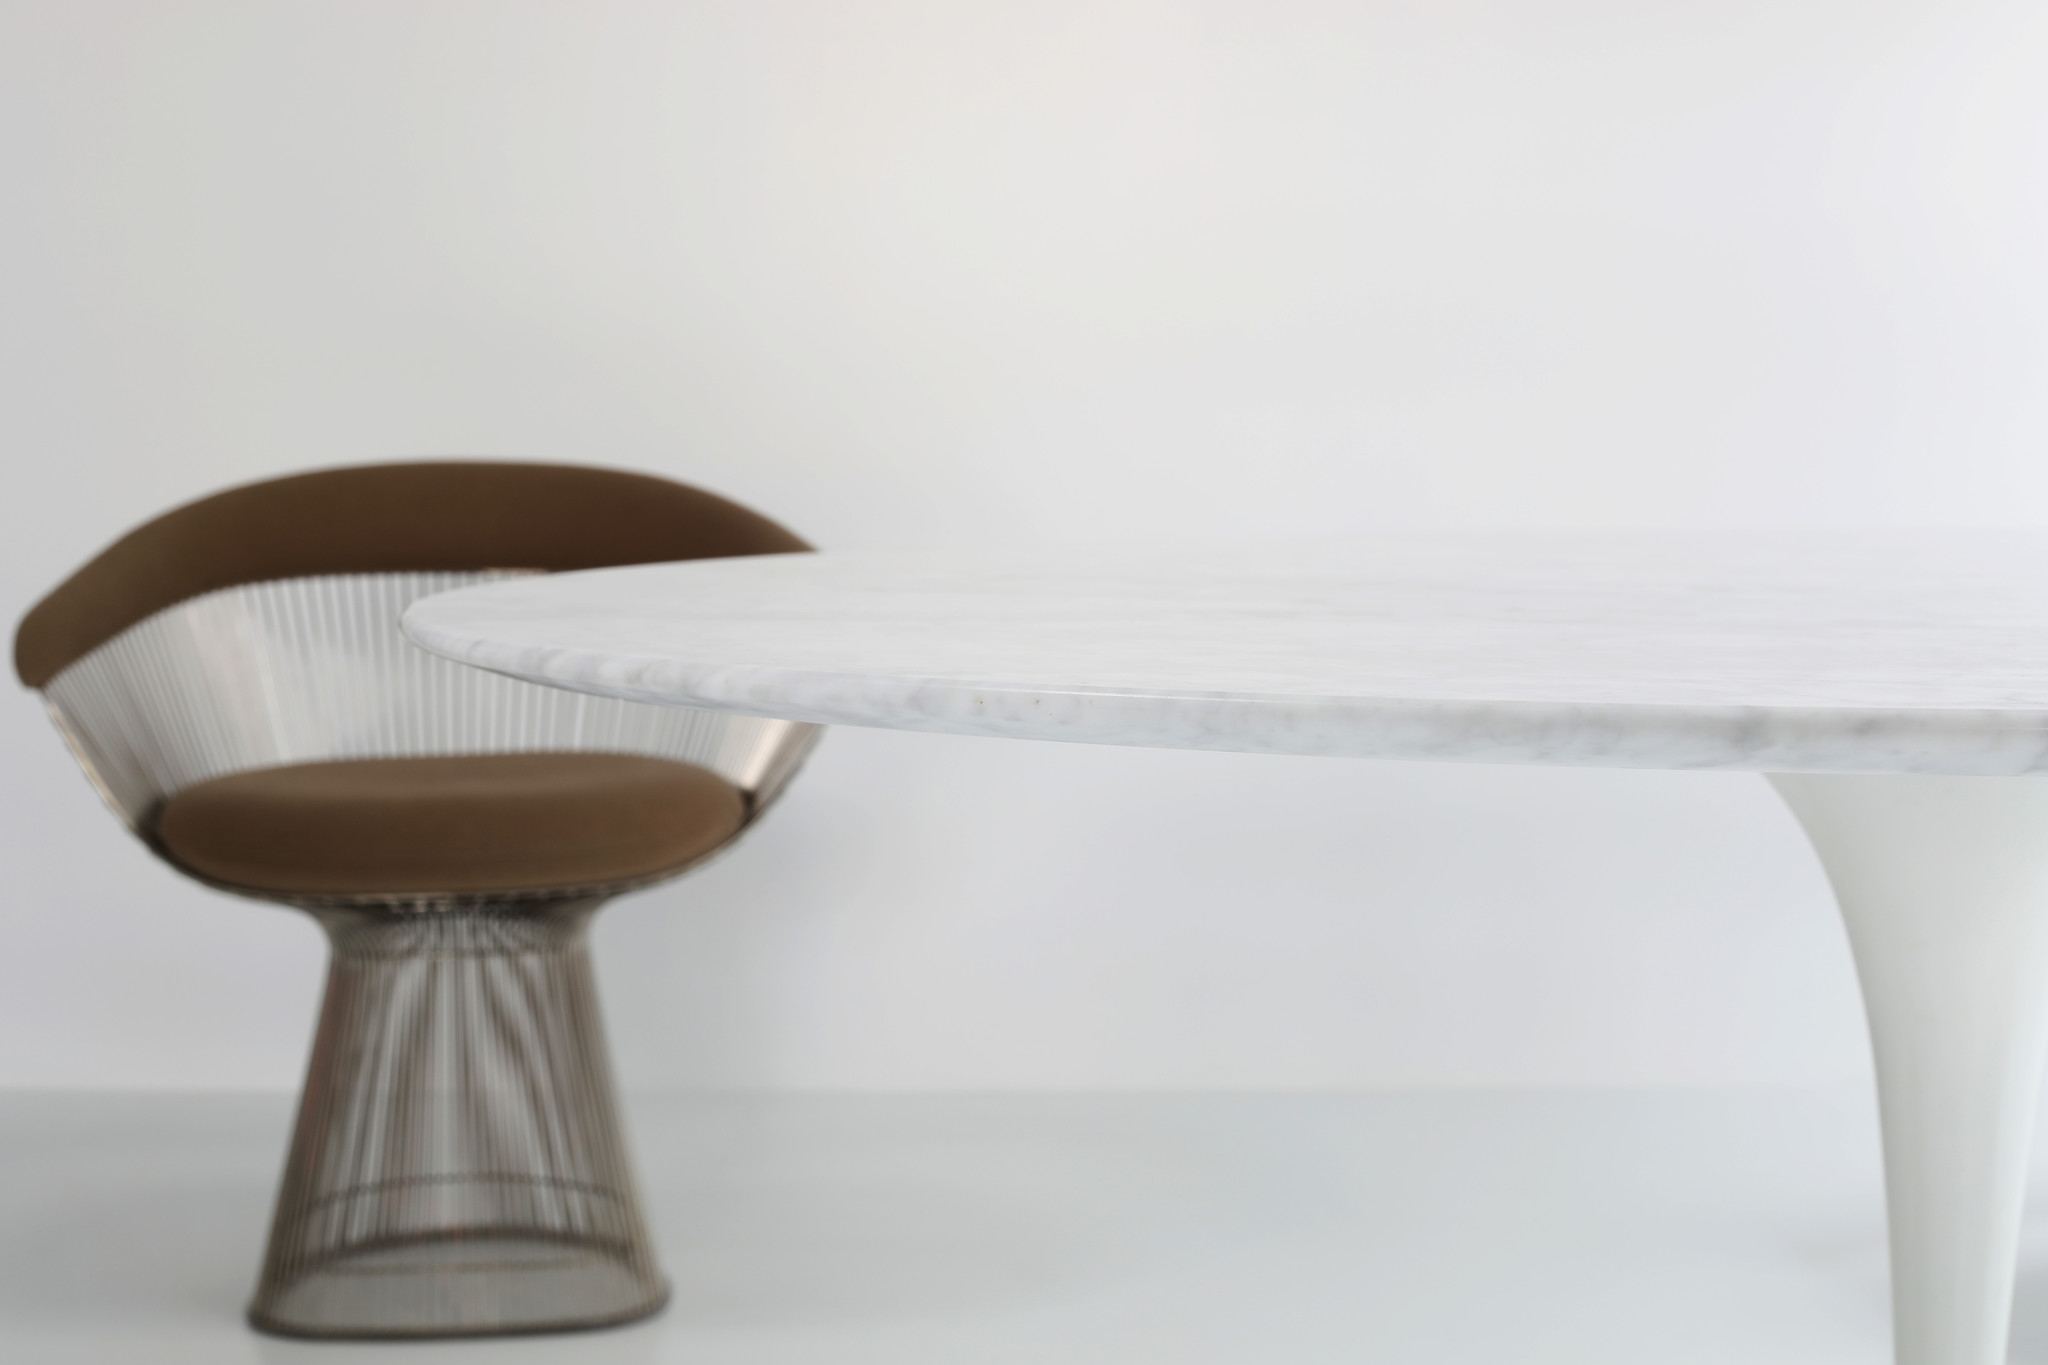 Marble Knoll tulip table designed by Eero Saarinen